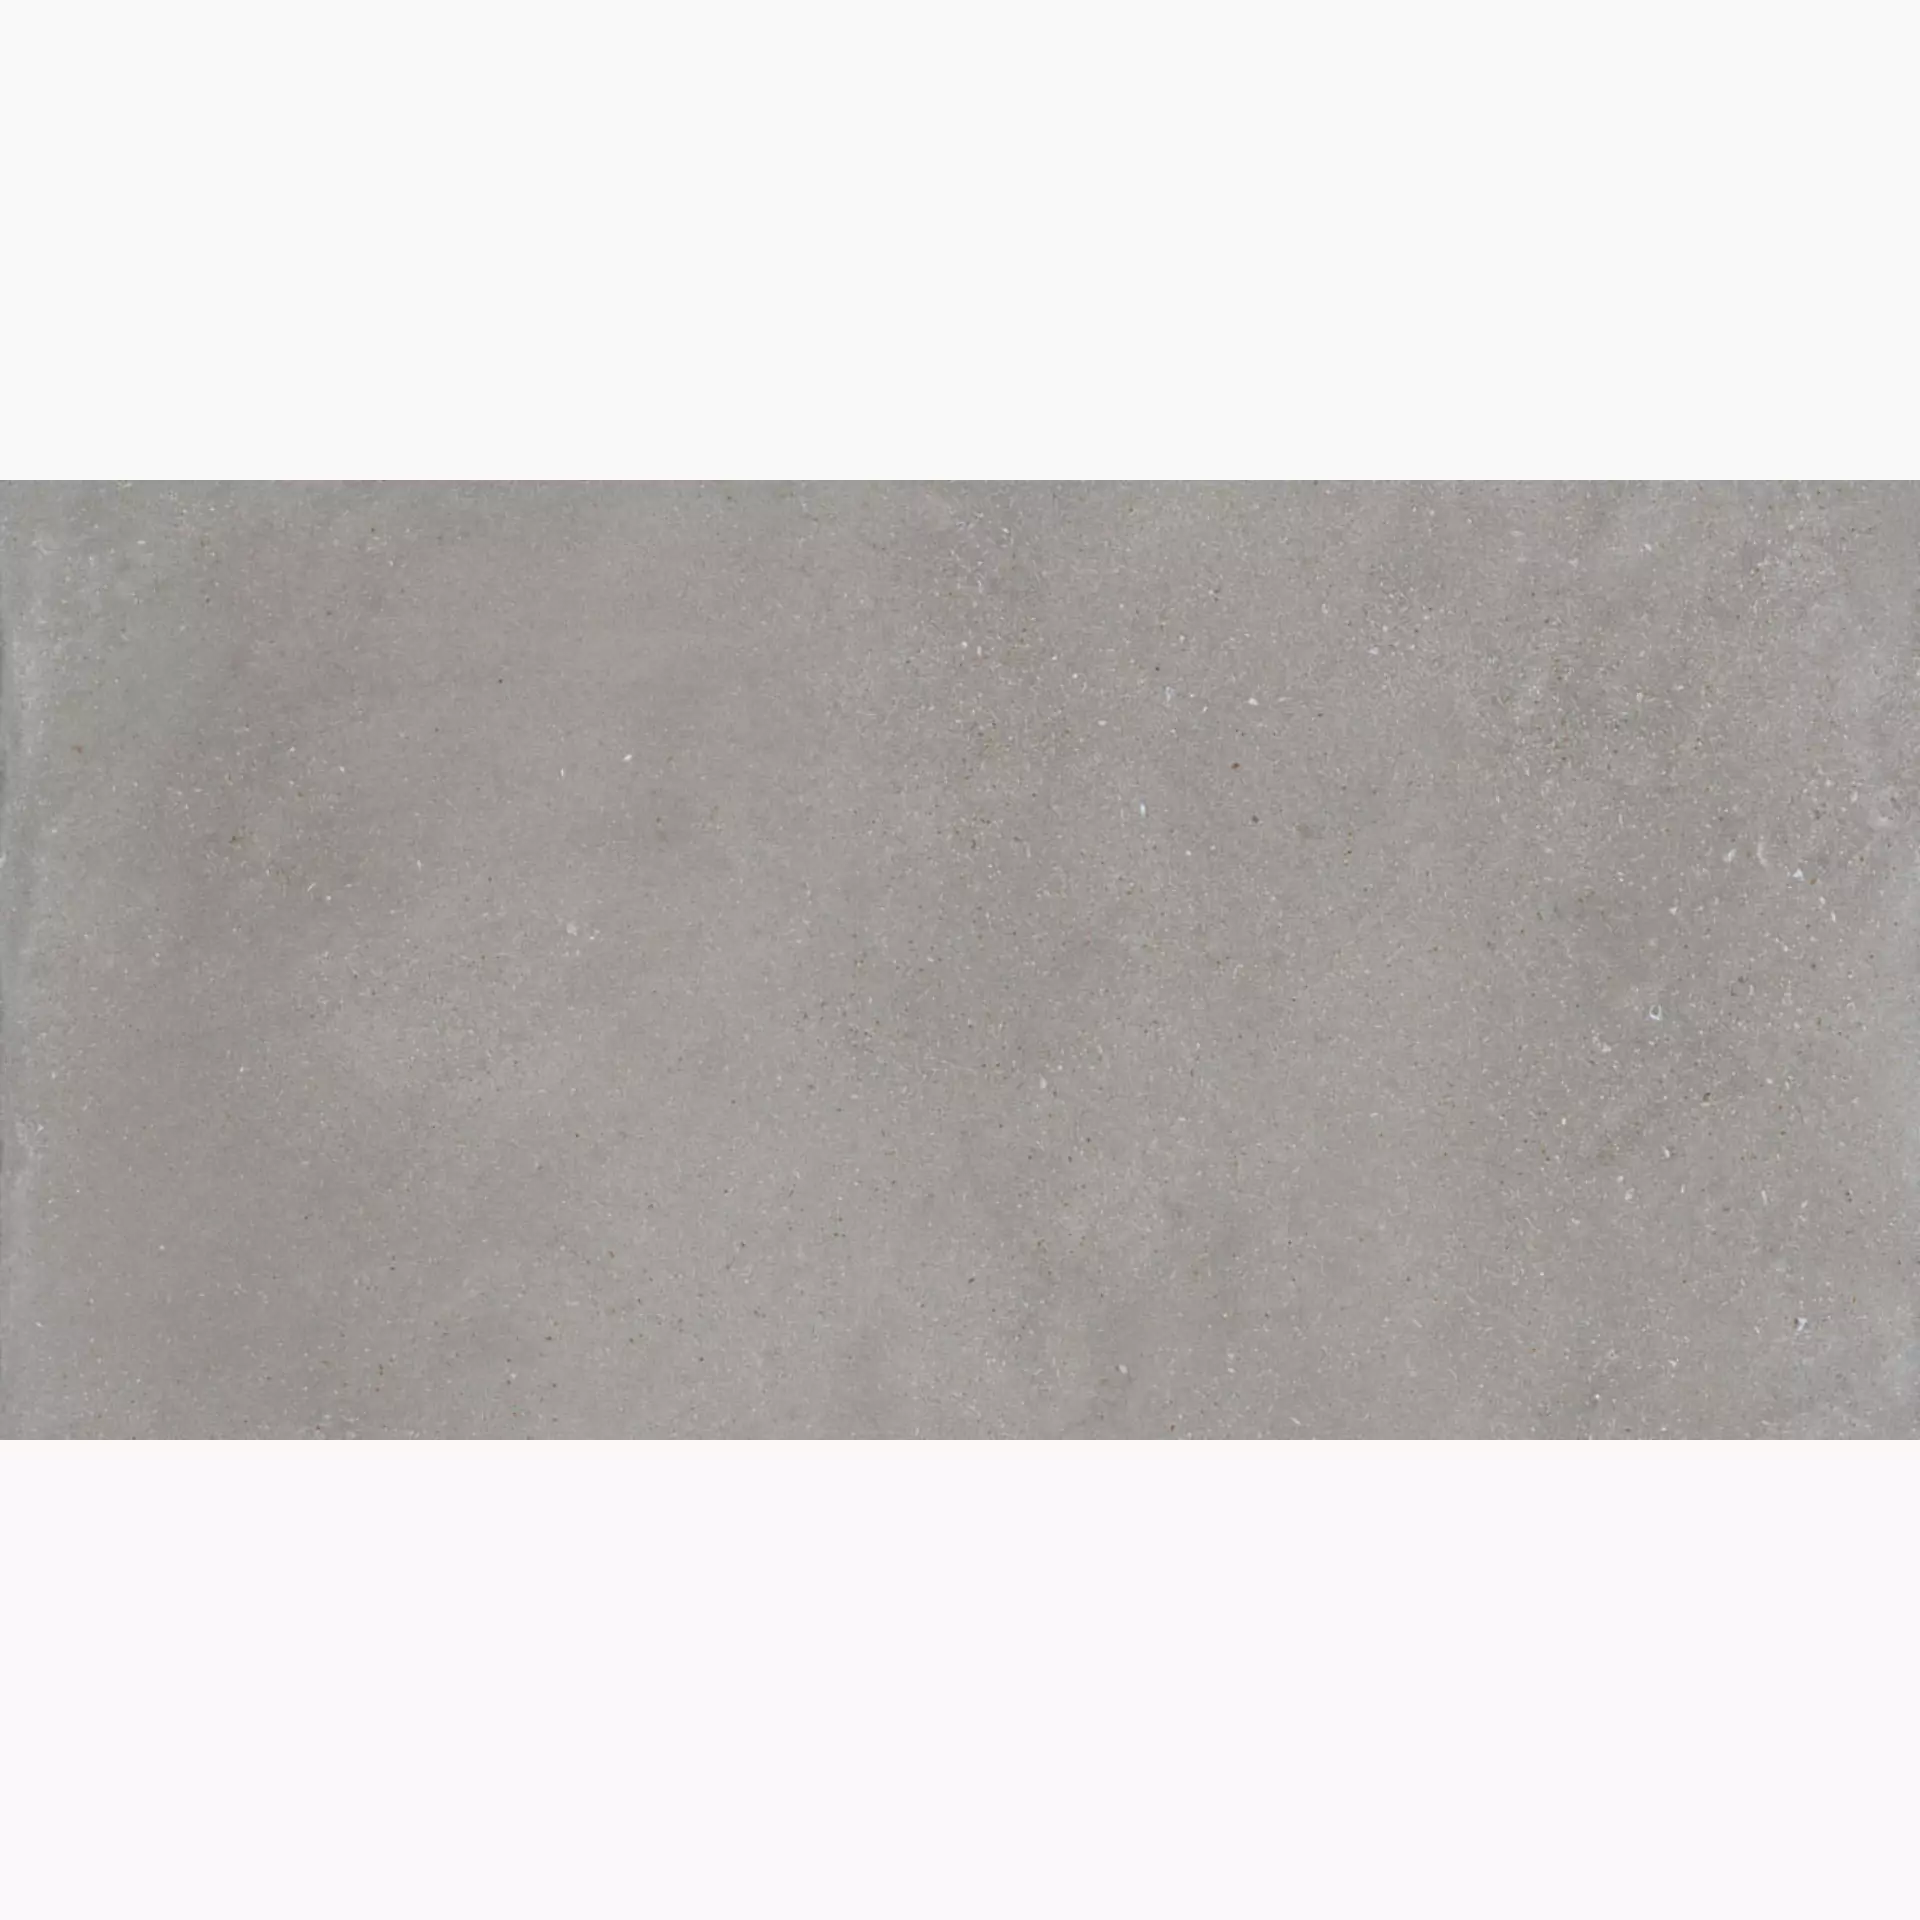 Imola Blox Grey Natural Flat Matt fondi 30x60cm rectified 10mm - BLOX 36G RM